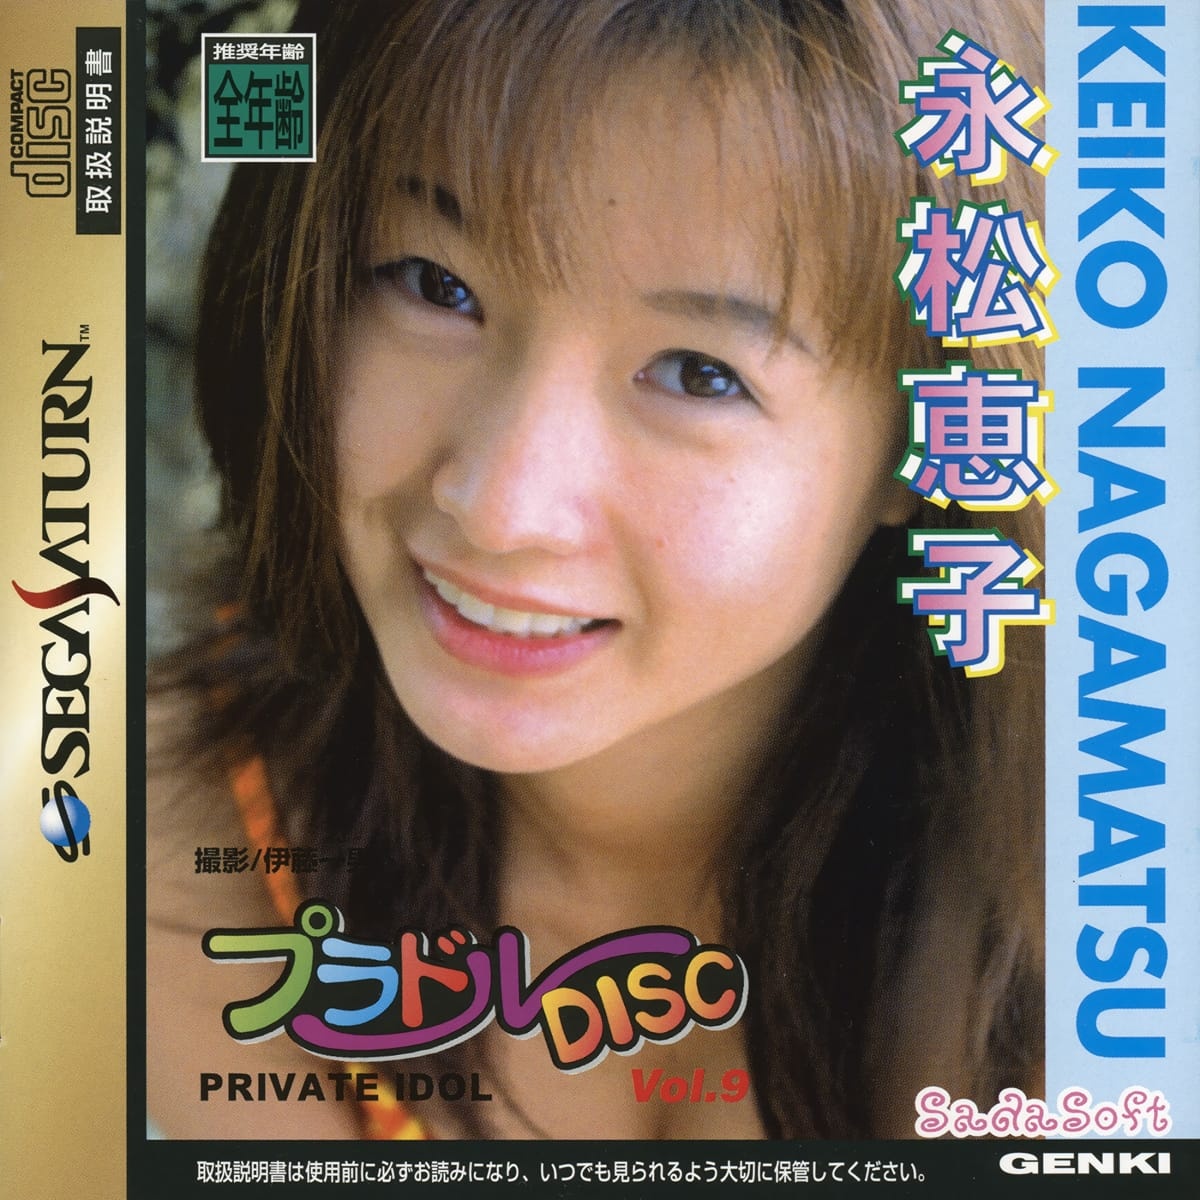 Private Idol Disc Vol. 9: Nagamatsu Keiko cover